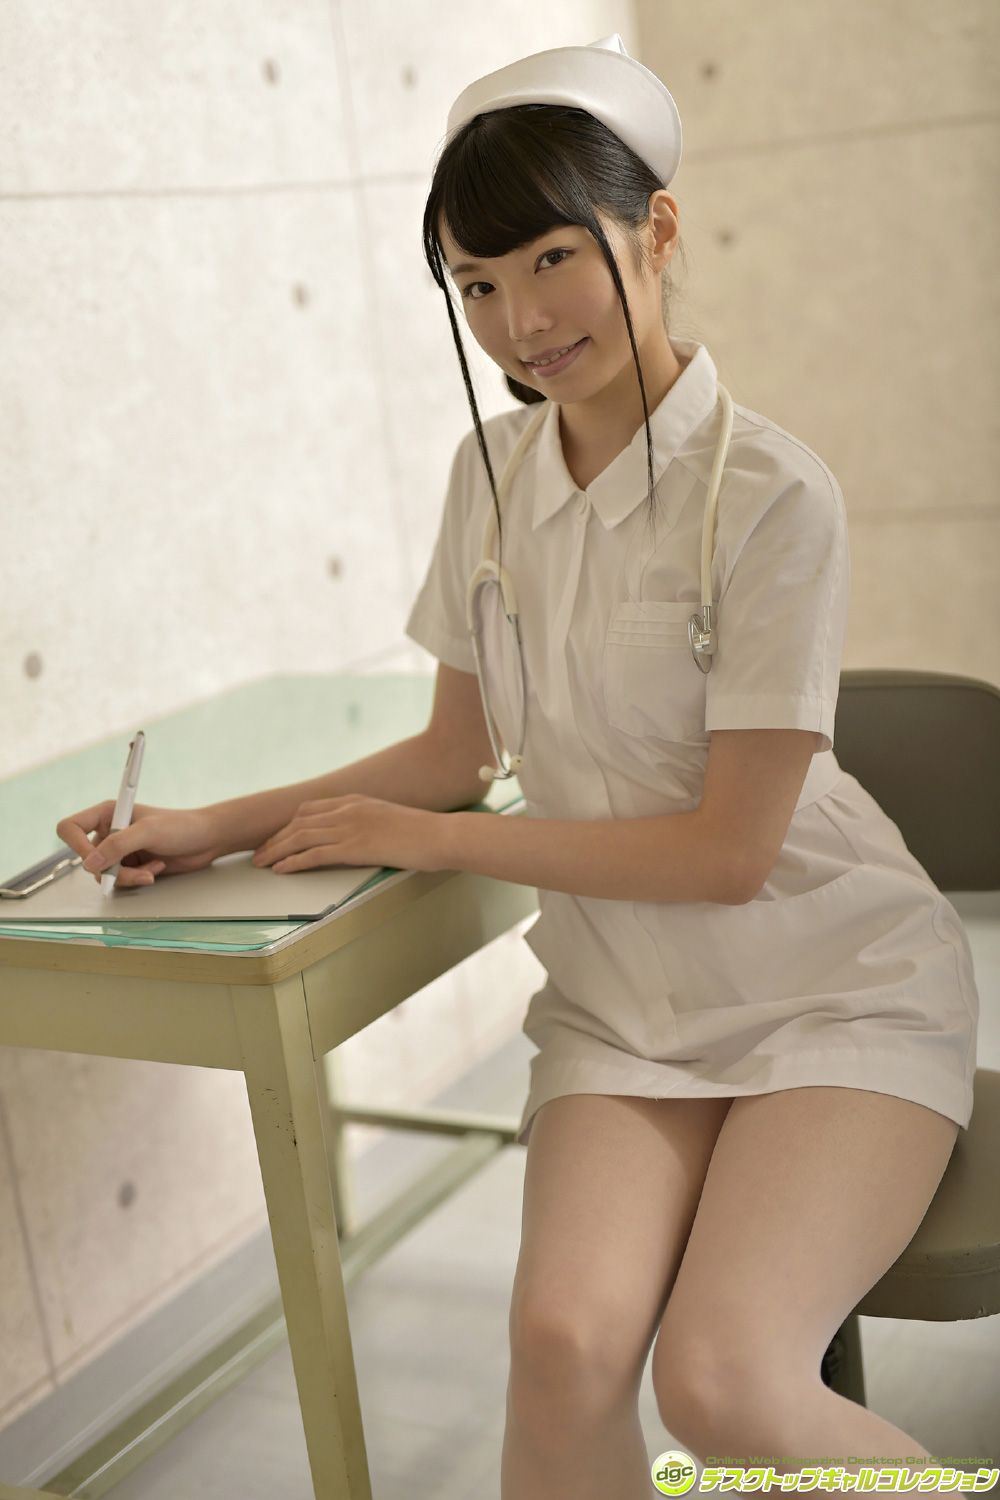 эротика японские медсестры фото 109